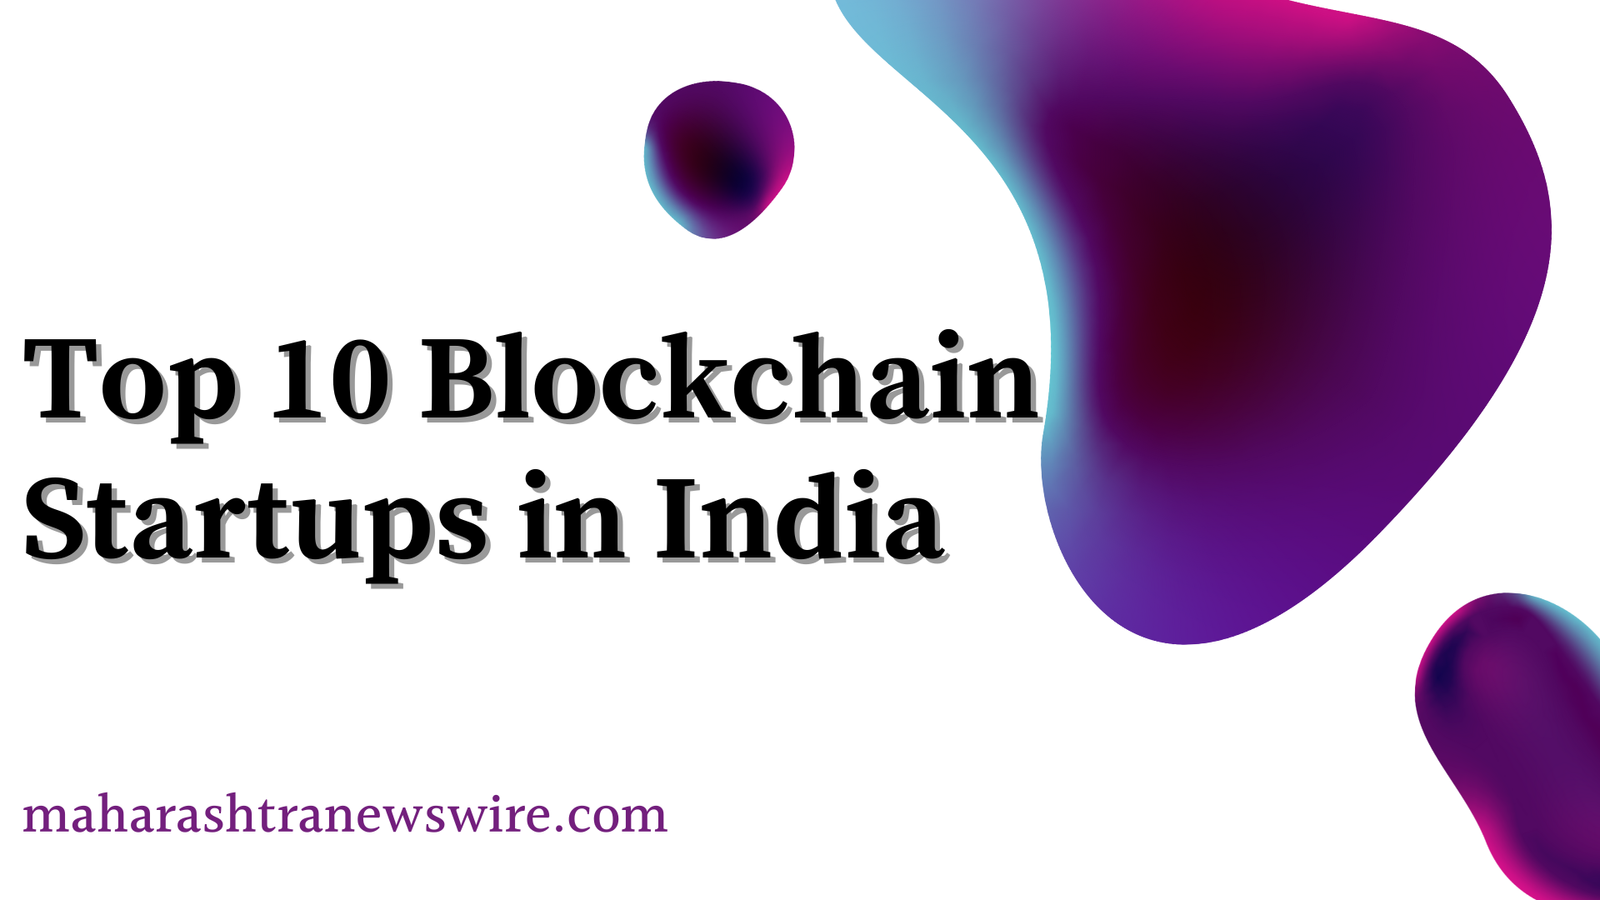 Top 10 Blockchain Startups in India